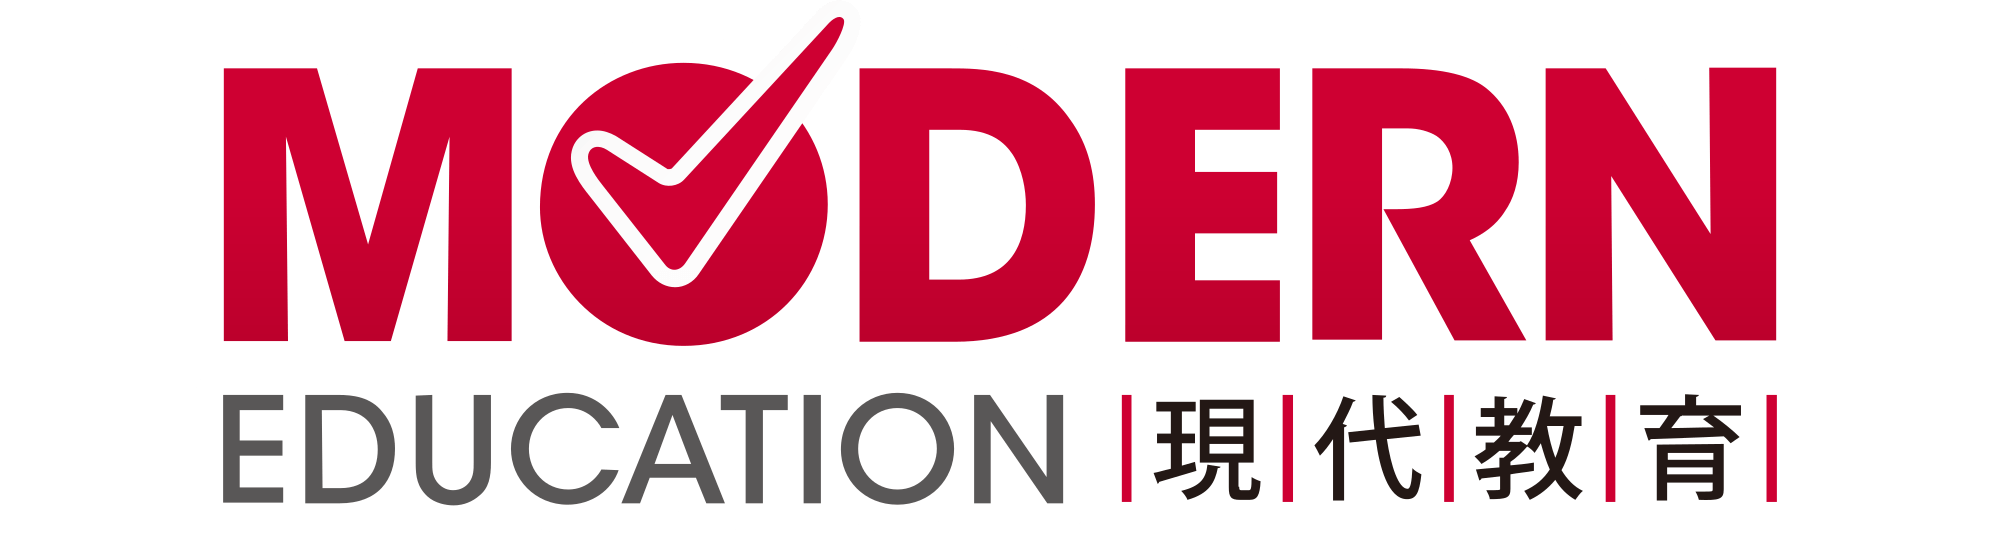 Modern Education Logo - File:Modern Education logo.svg - Wikimedia Commons